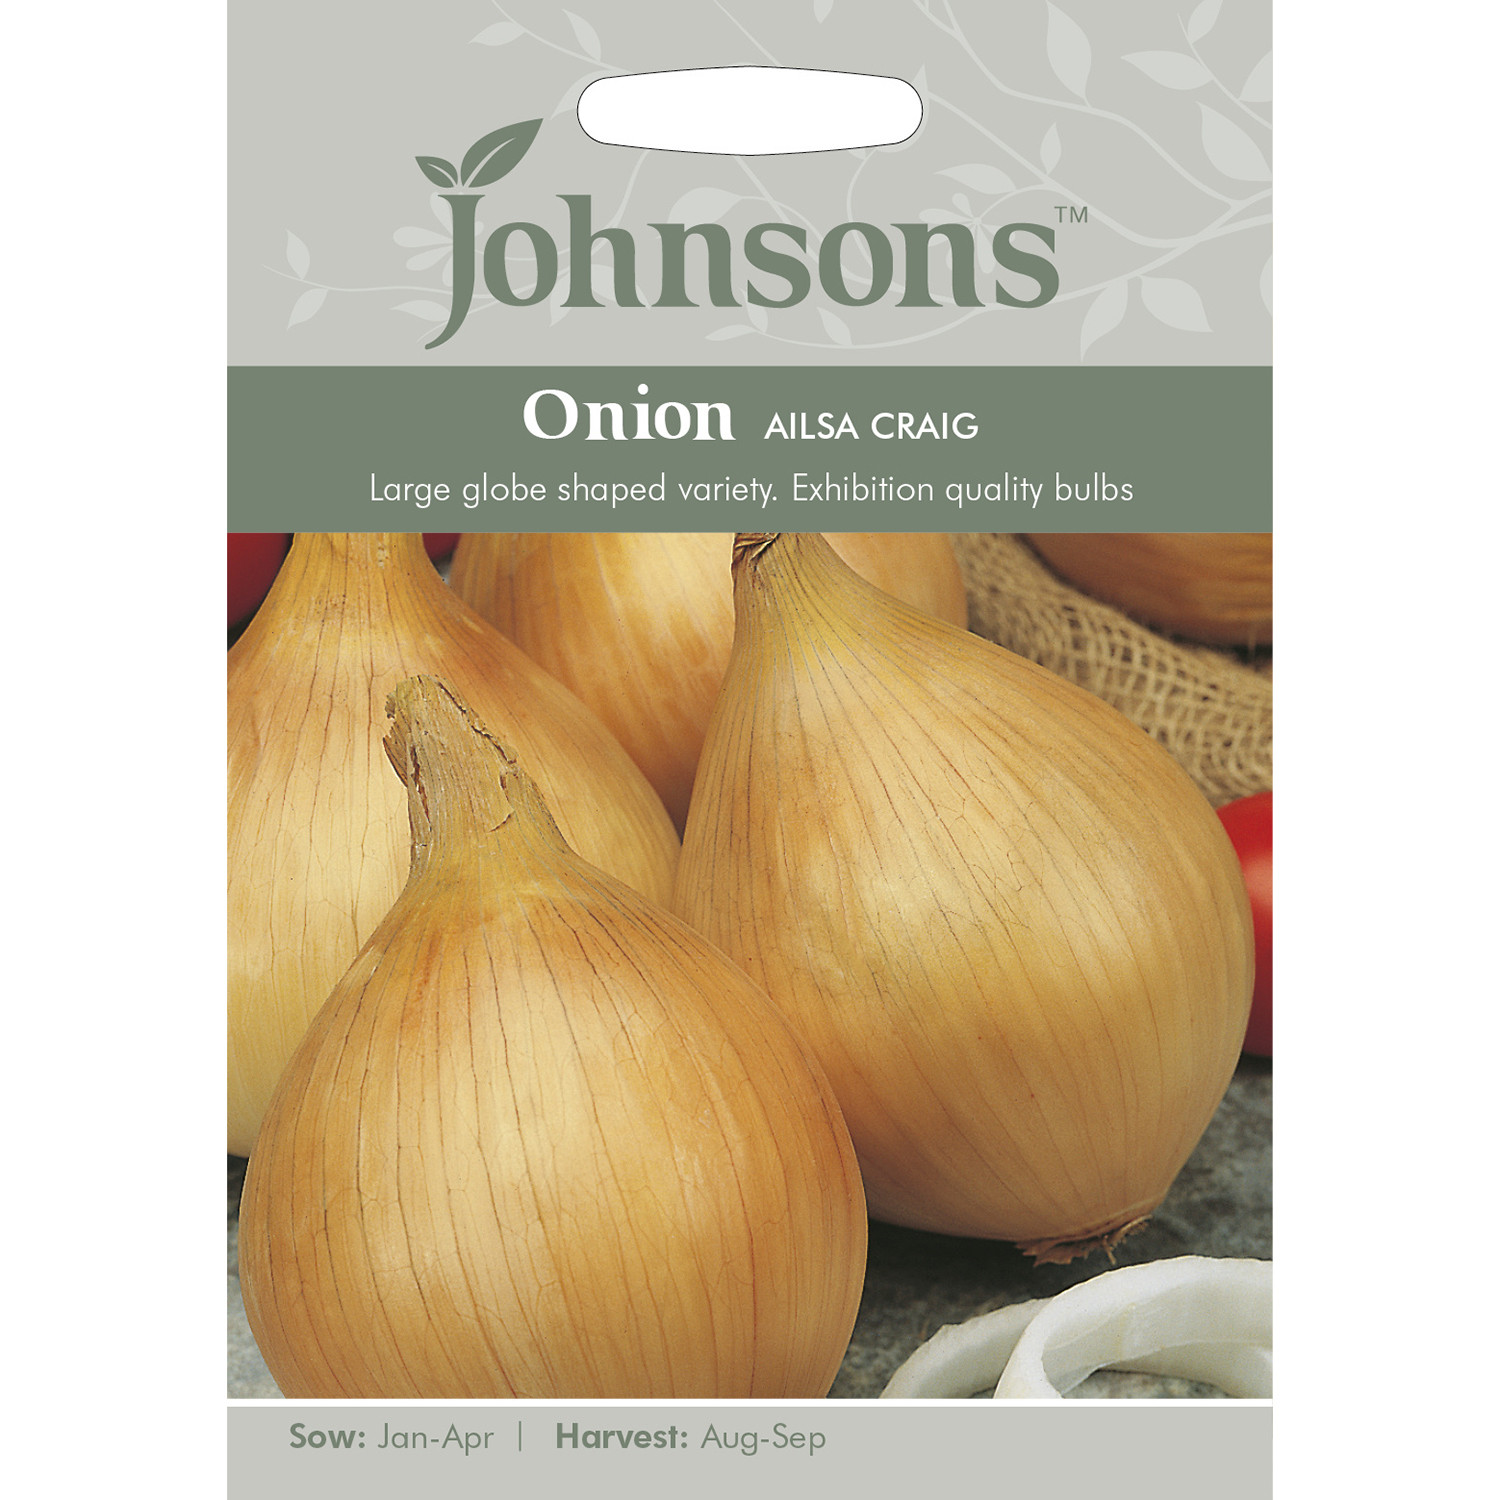 Johnsons Ailsa Craig Onion Seeds Image 2